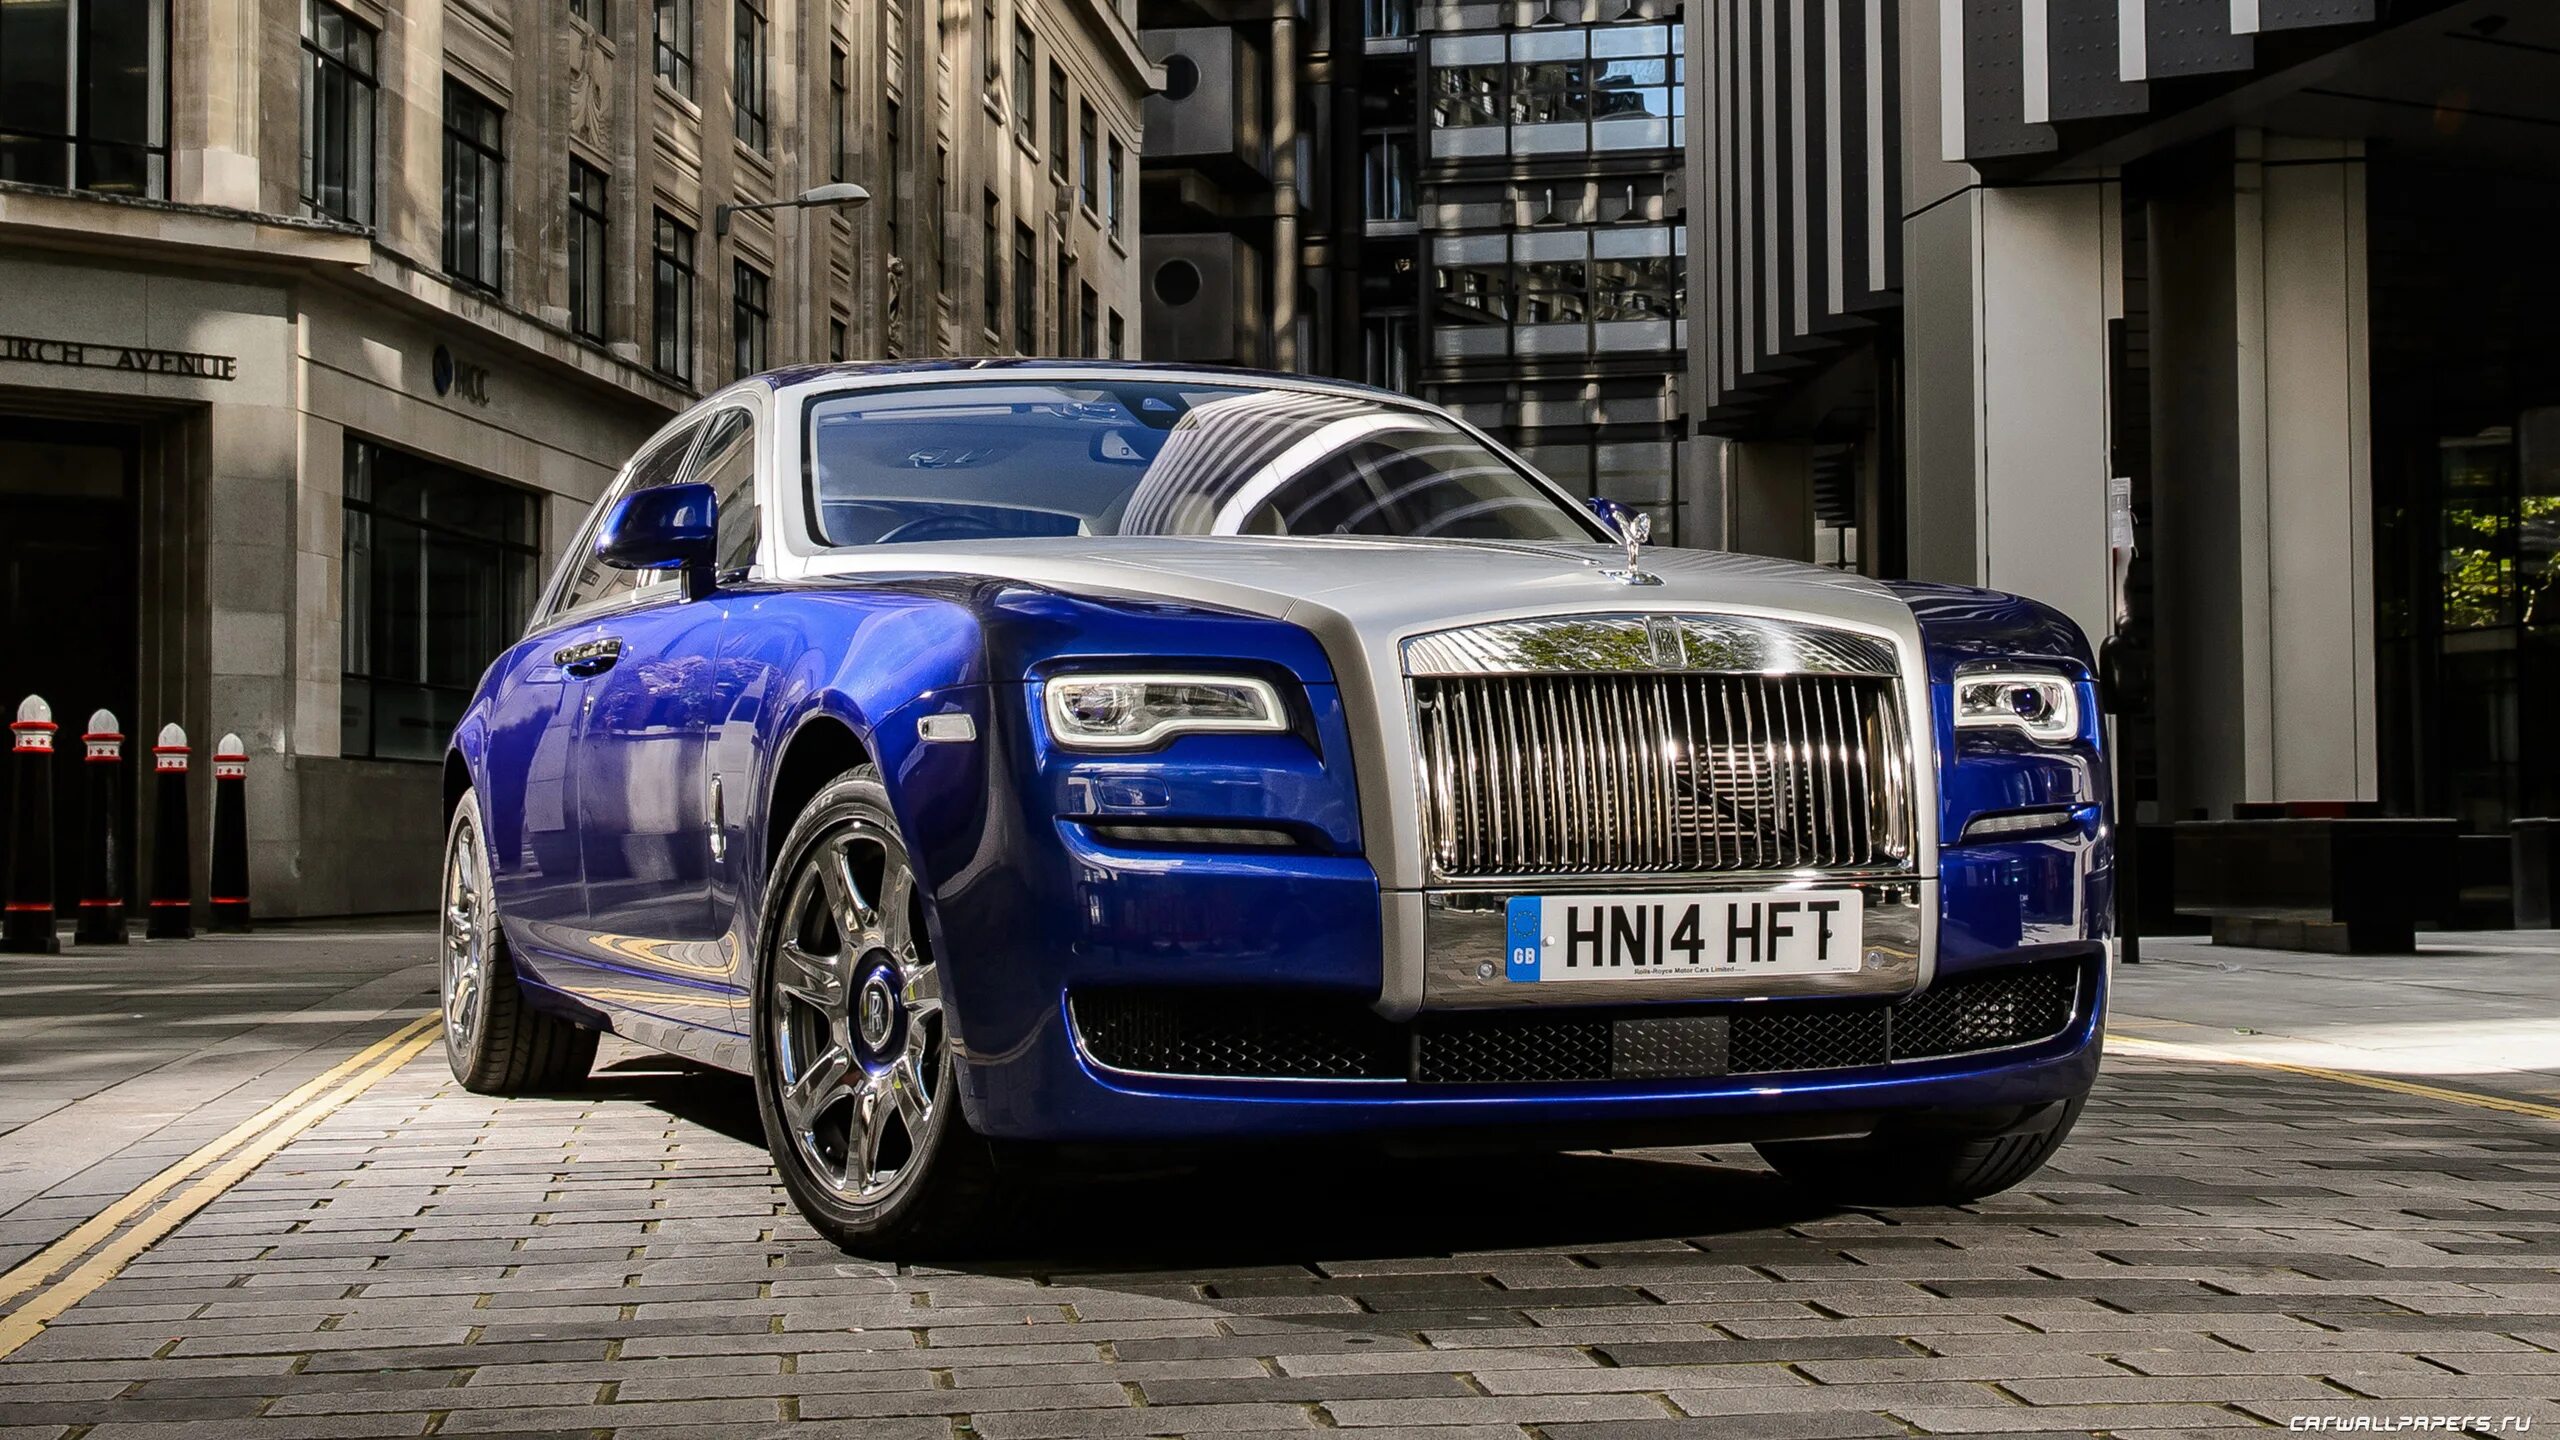 Авто роллс. Машина Роллс Ройс. Rolls Royce Ghost 2015. Rols Royals. Rolls Royce машина Rolls Royce.